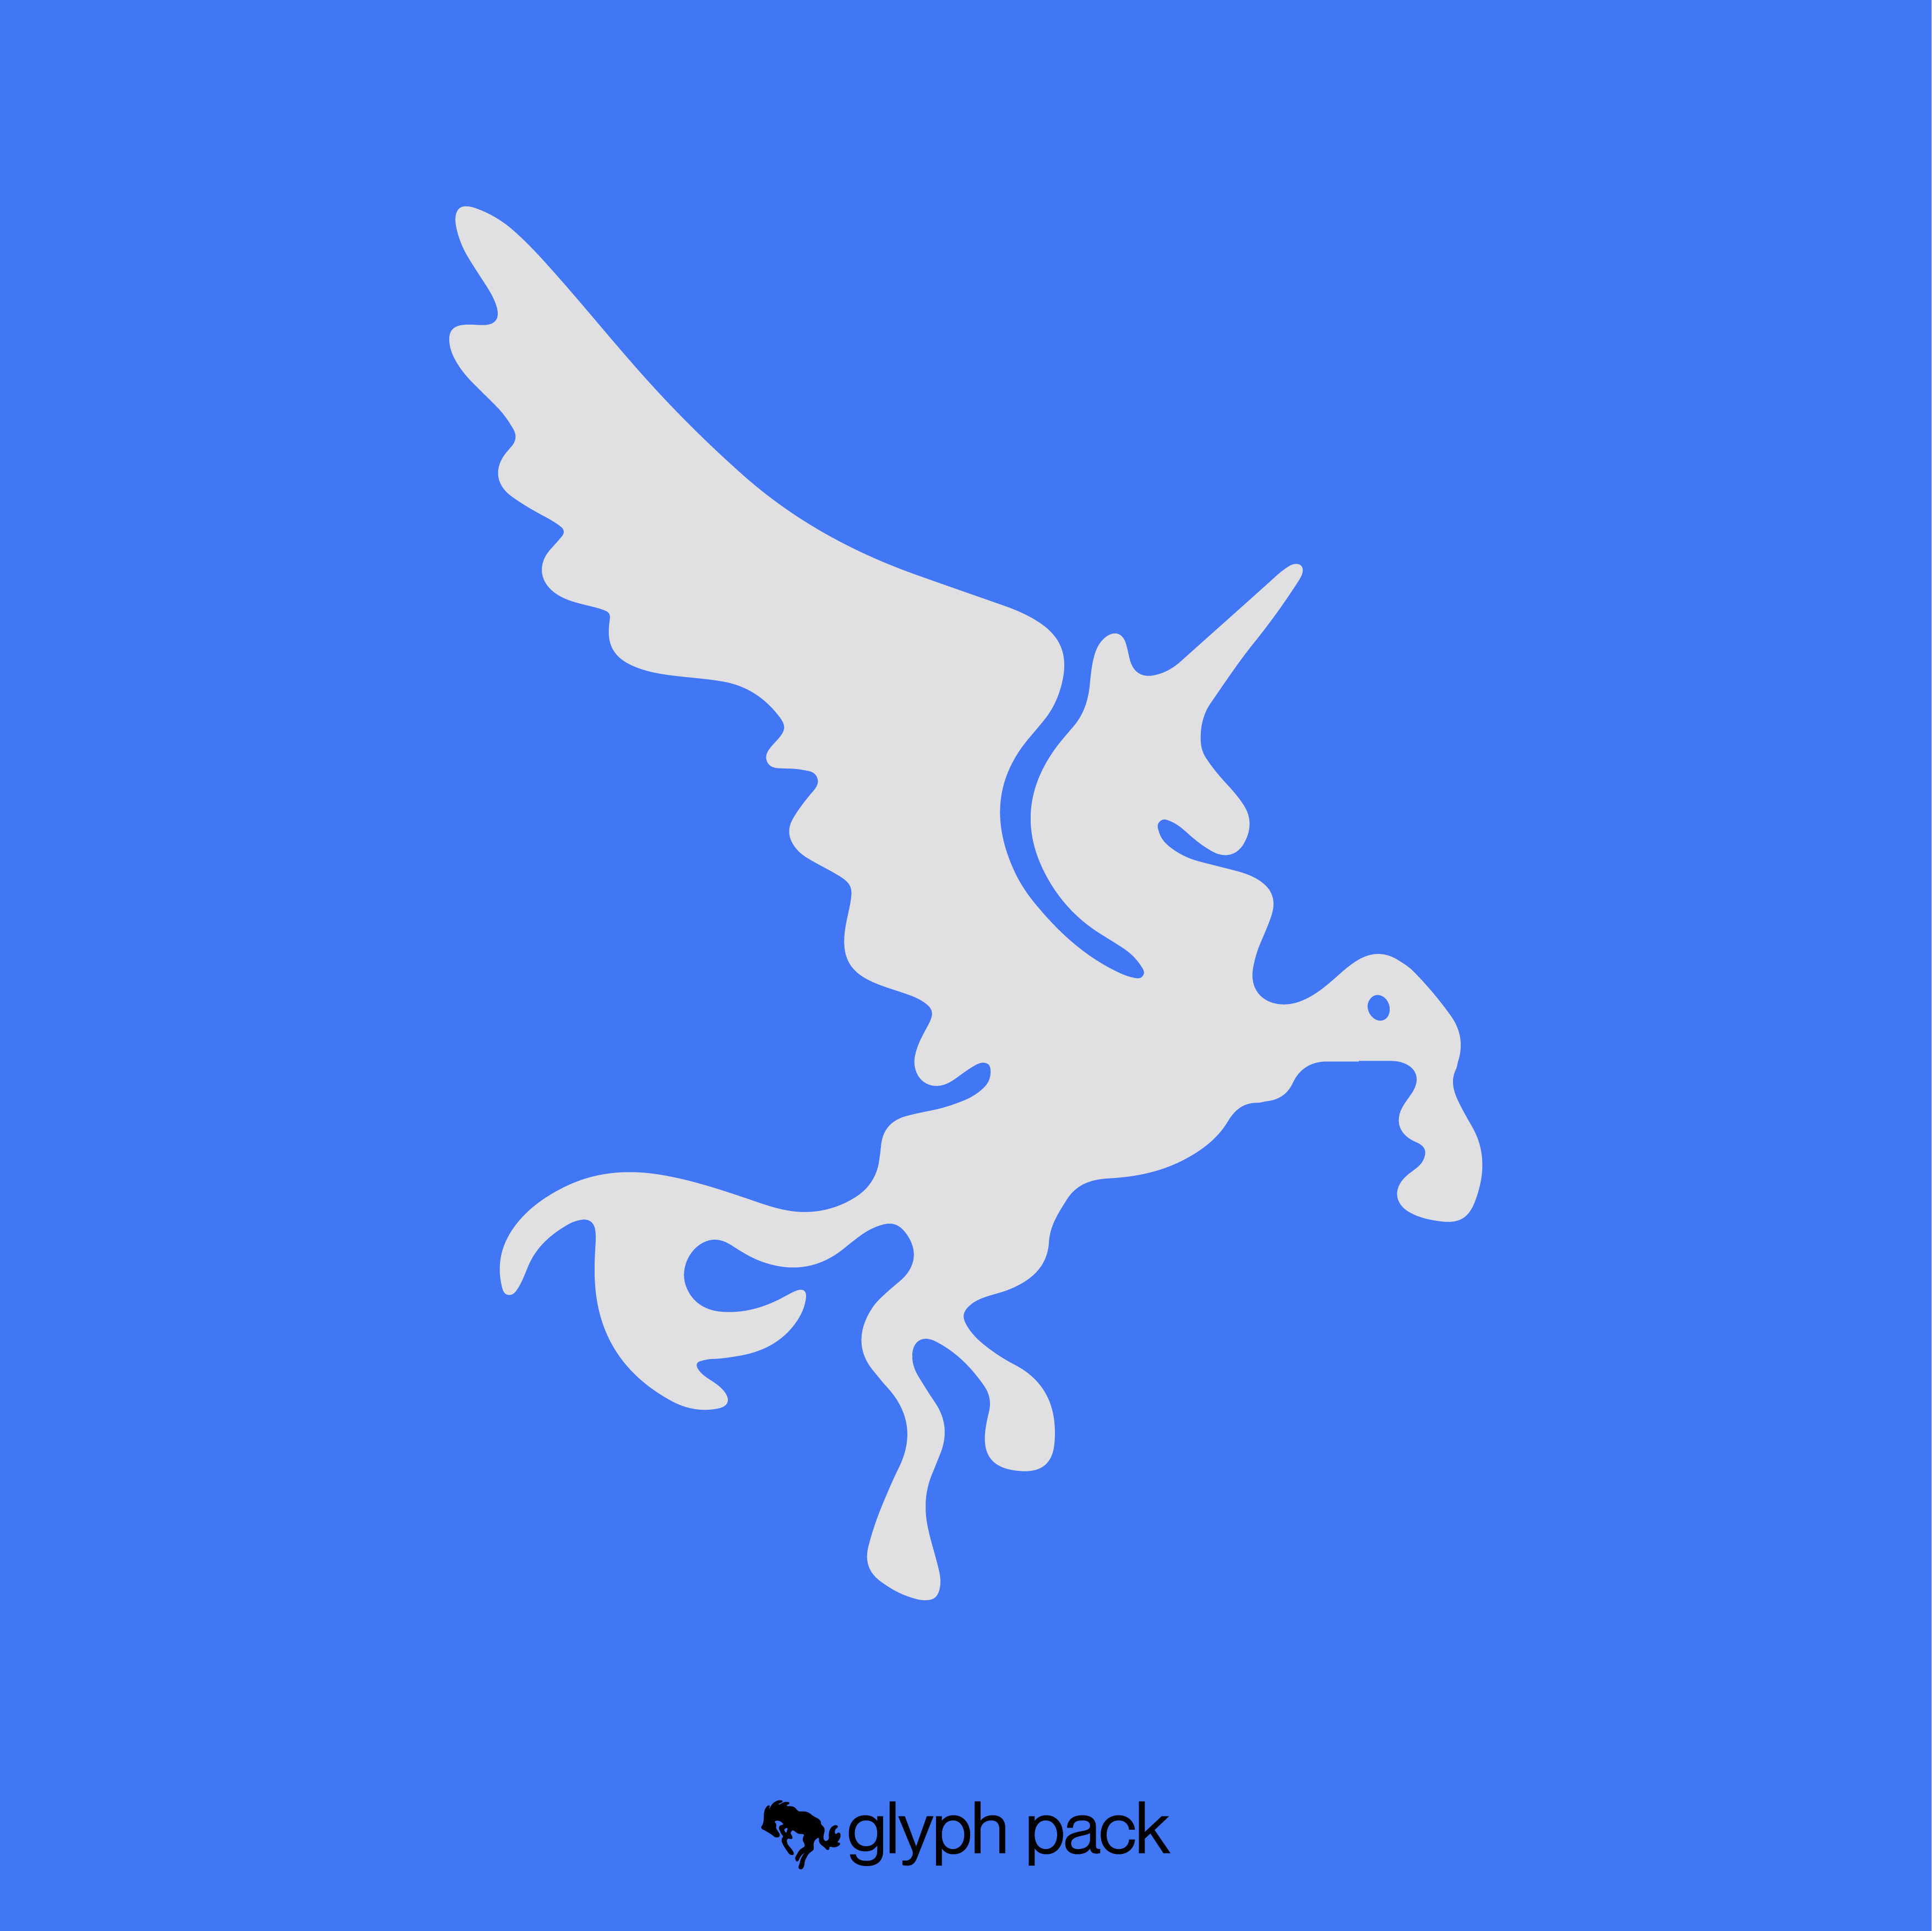 Glyph Pack